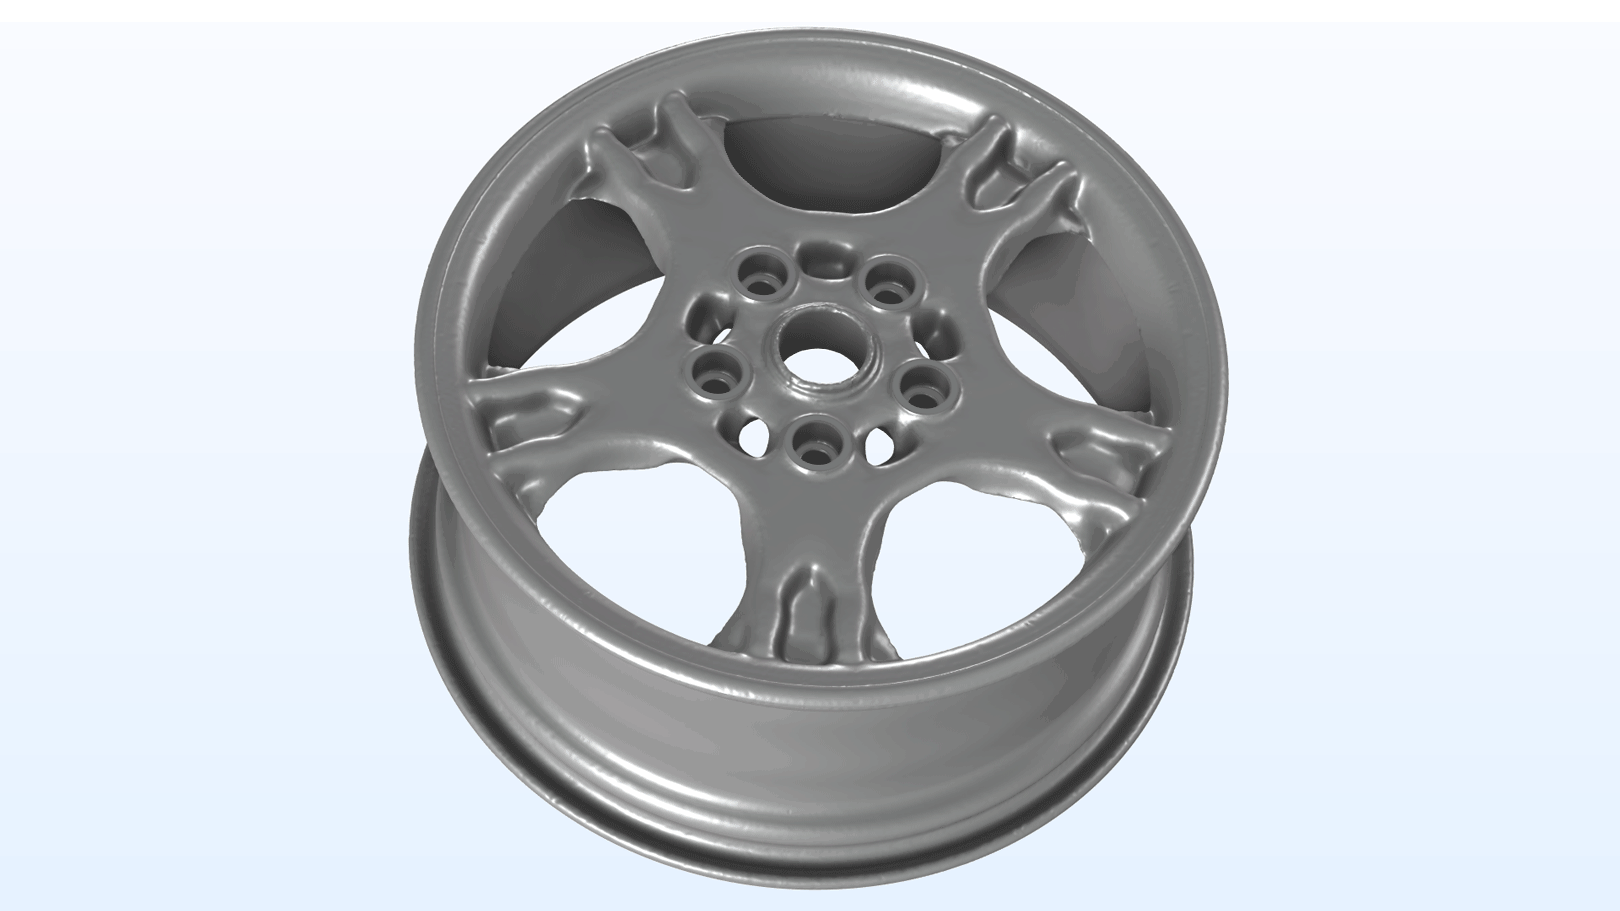 A topology-optimized wheel rim model in gray.